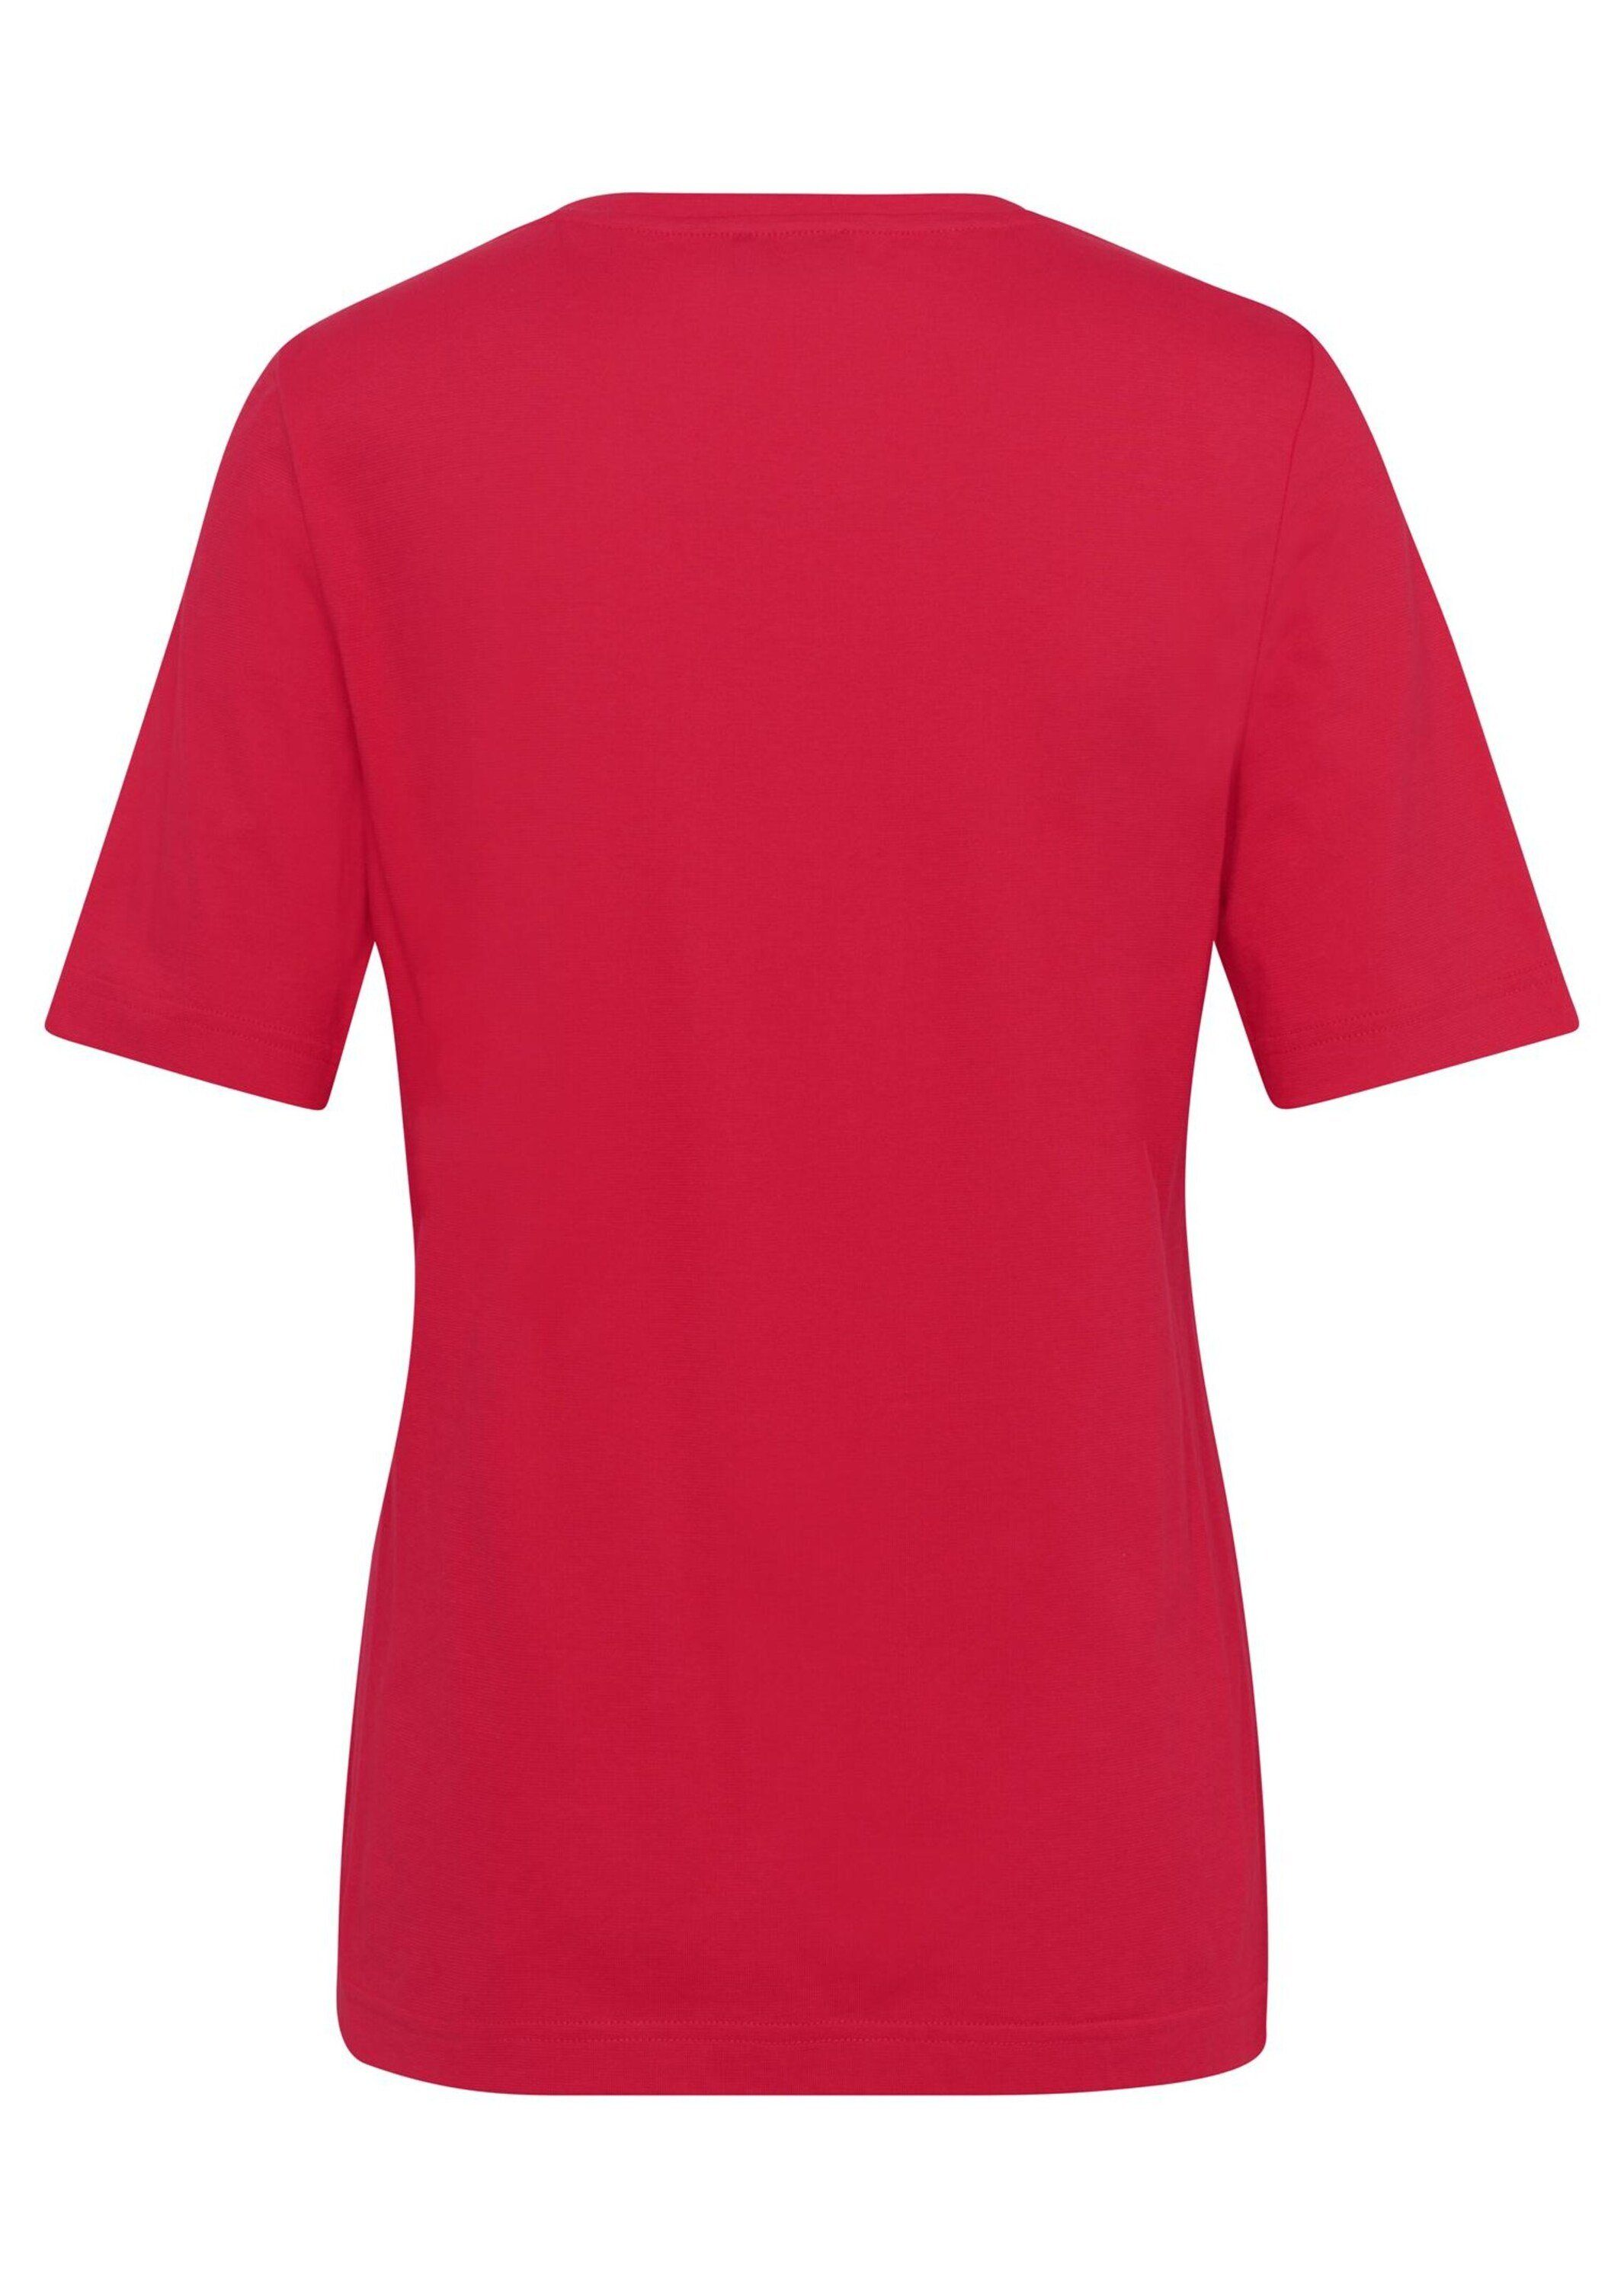 GOLDNER Print-Shirt Kurzgröße: rot